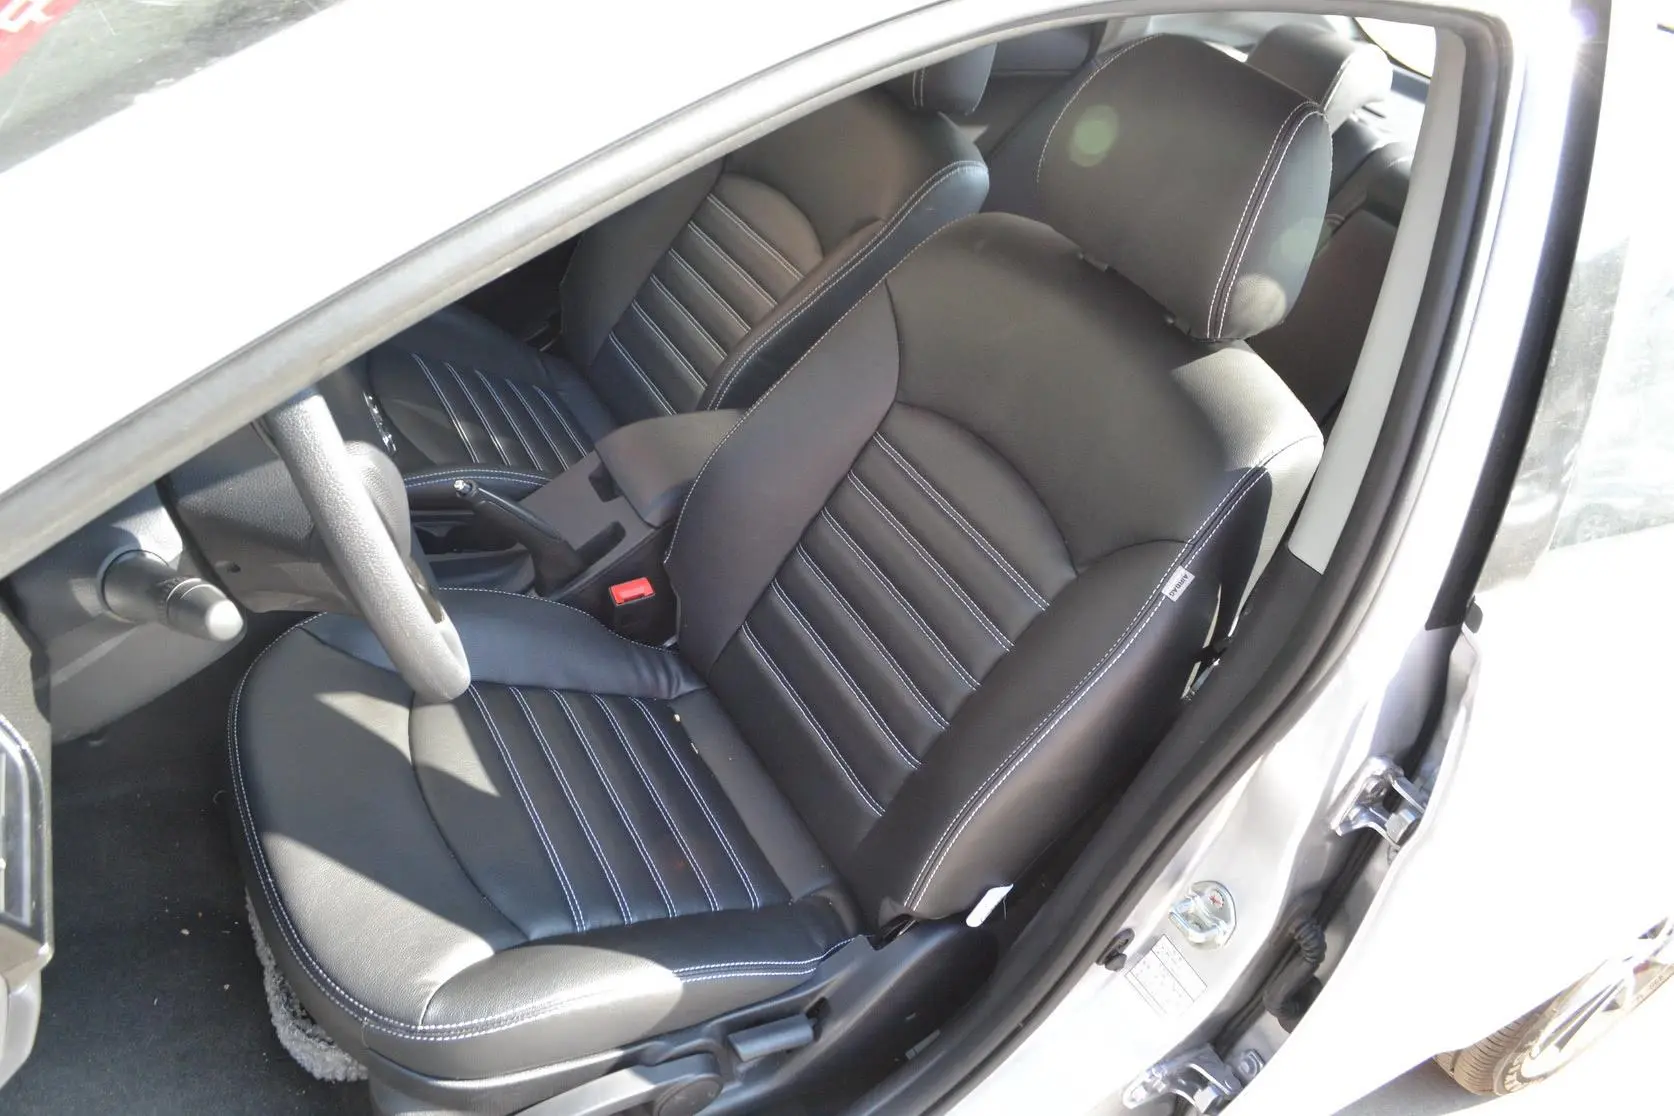 V5菱致Turbo 1.5T CVT 智控型驾驶员座椅